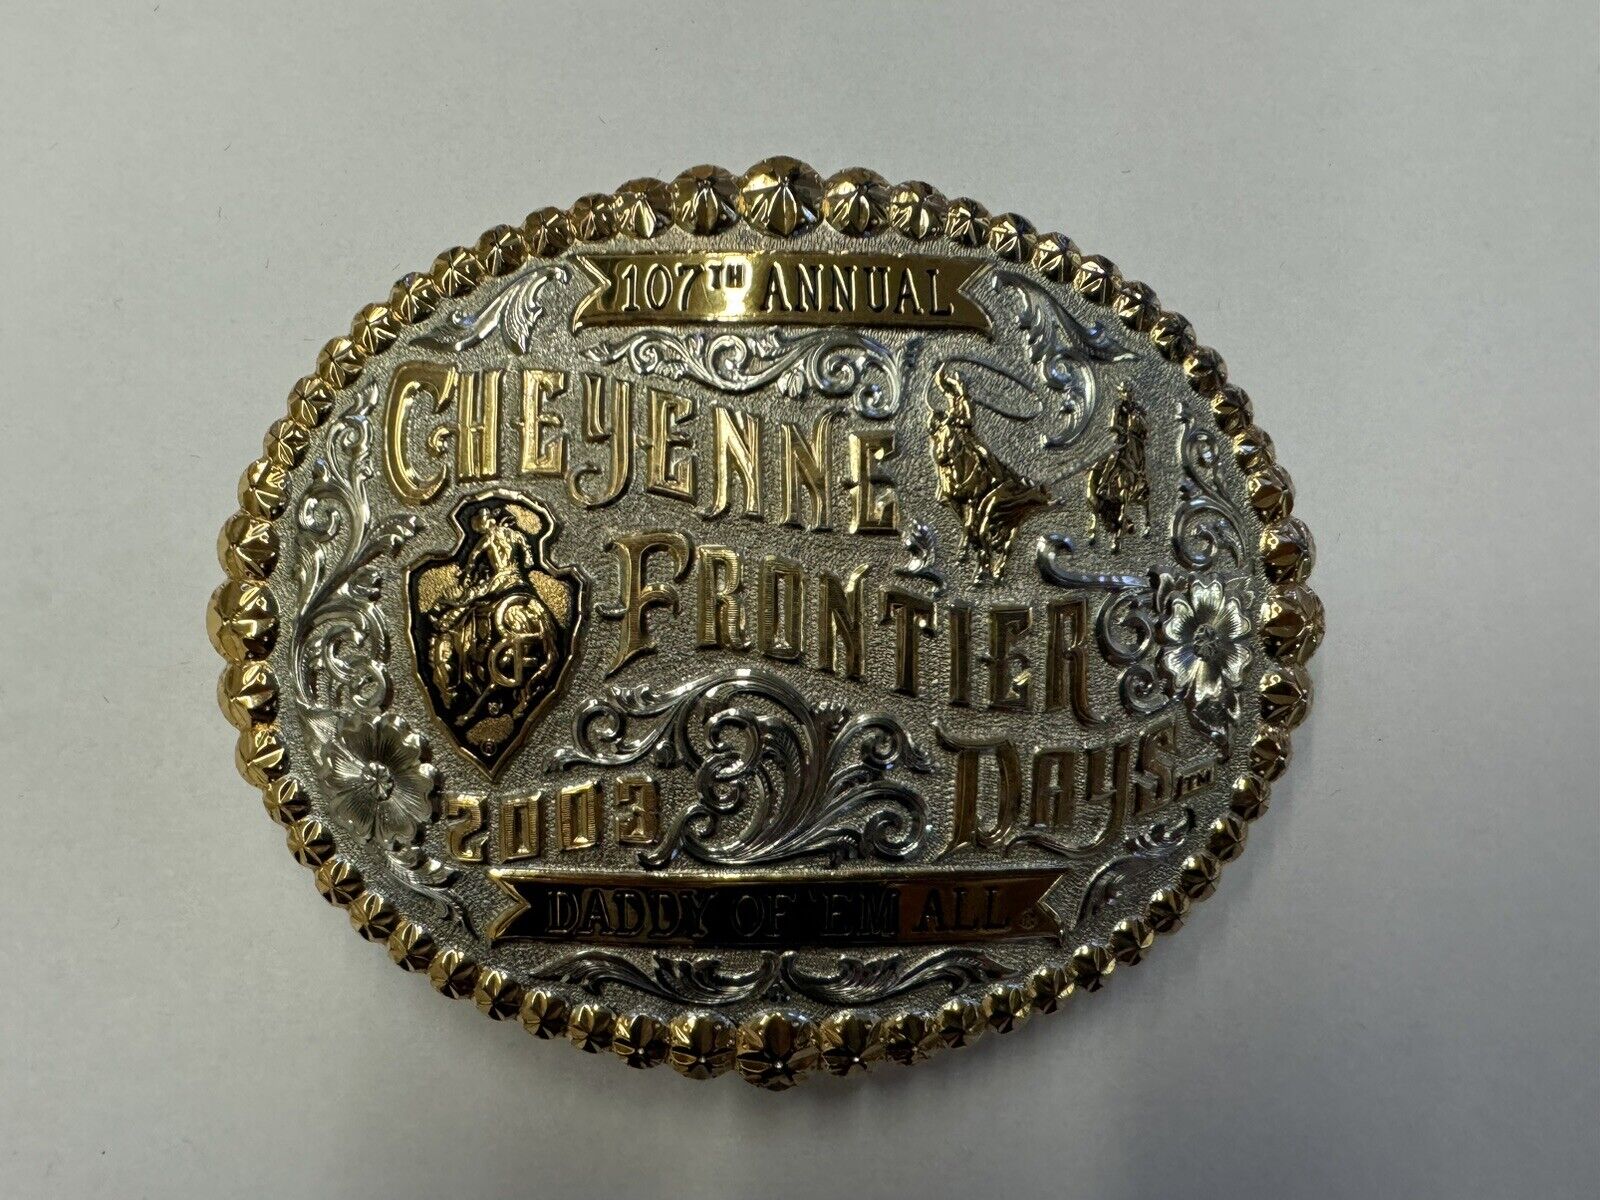 Vintage Montana Silversmith Cheyenne Rodeo Buckle